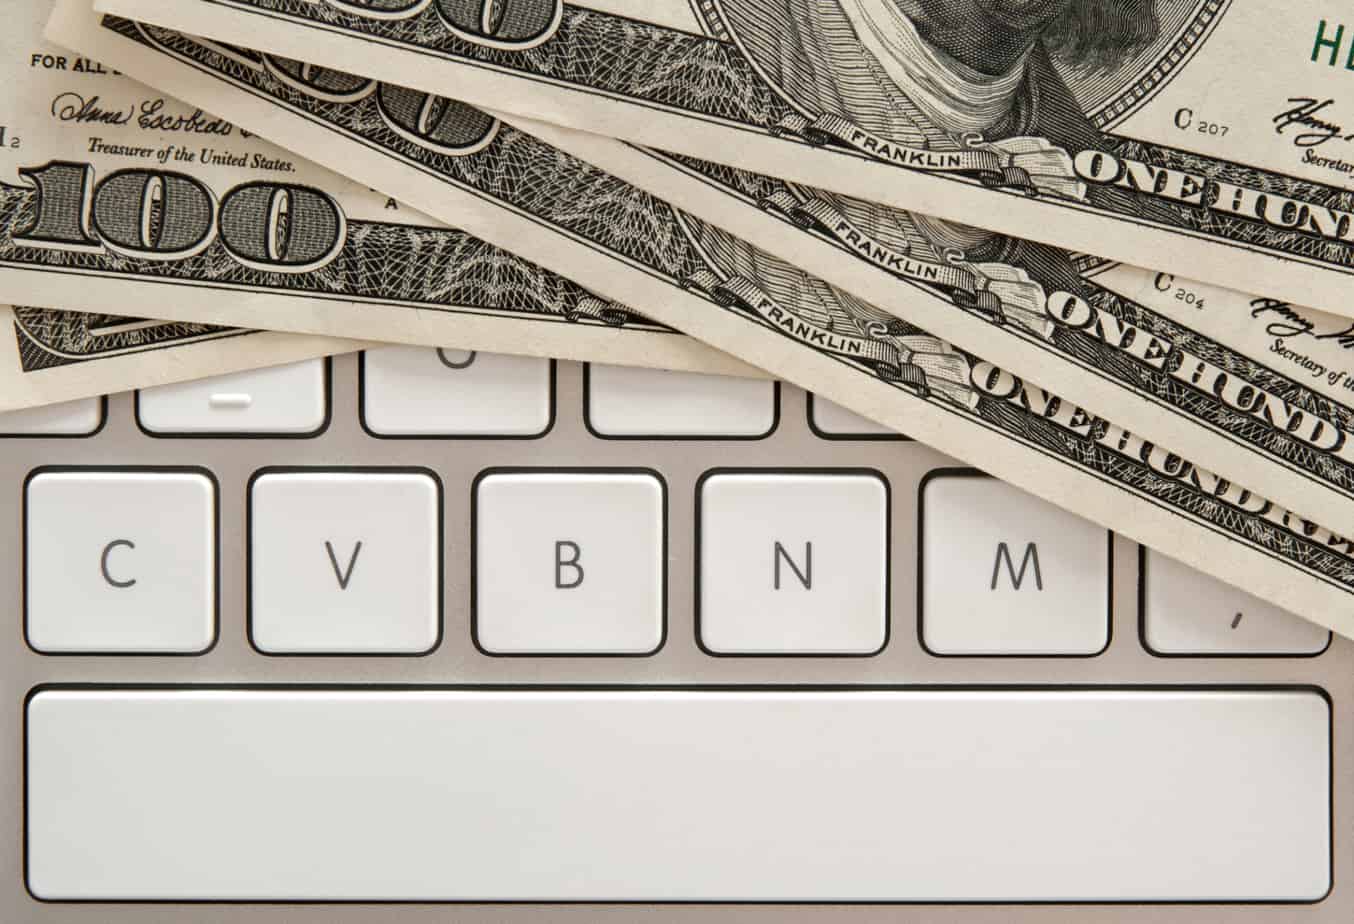 Money Bills On Computer Keyboard With Spacebar 18398807